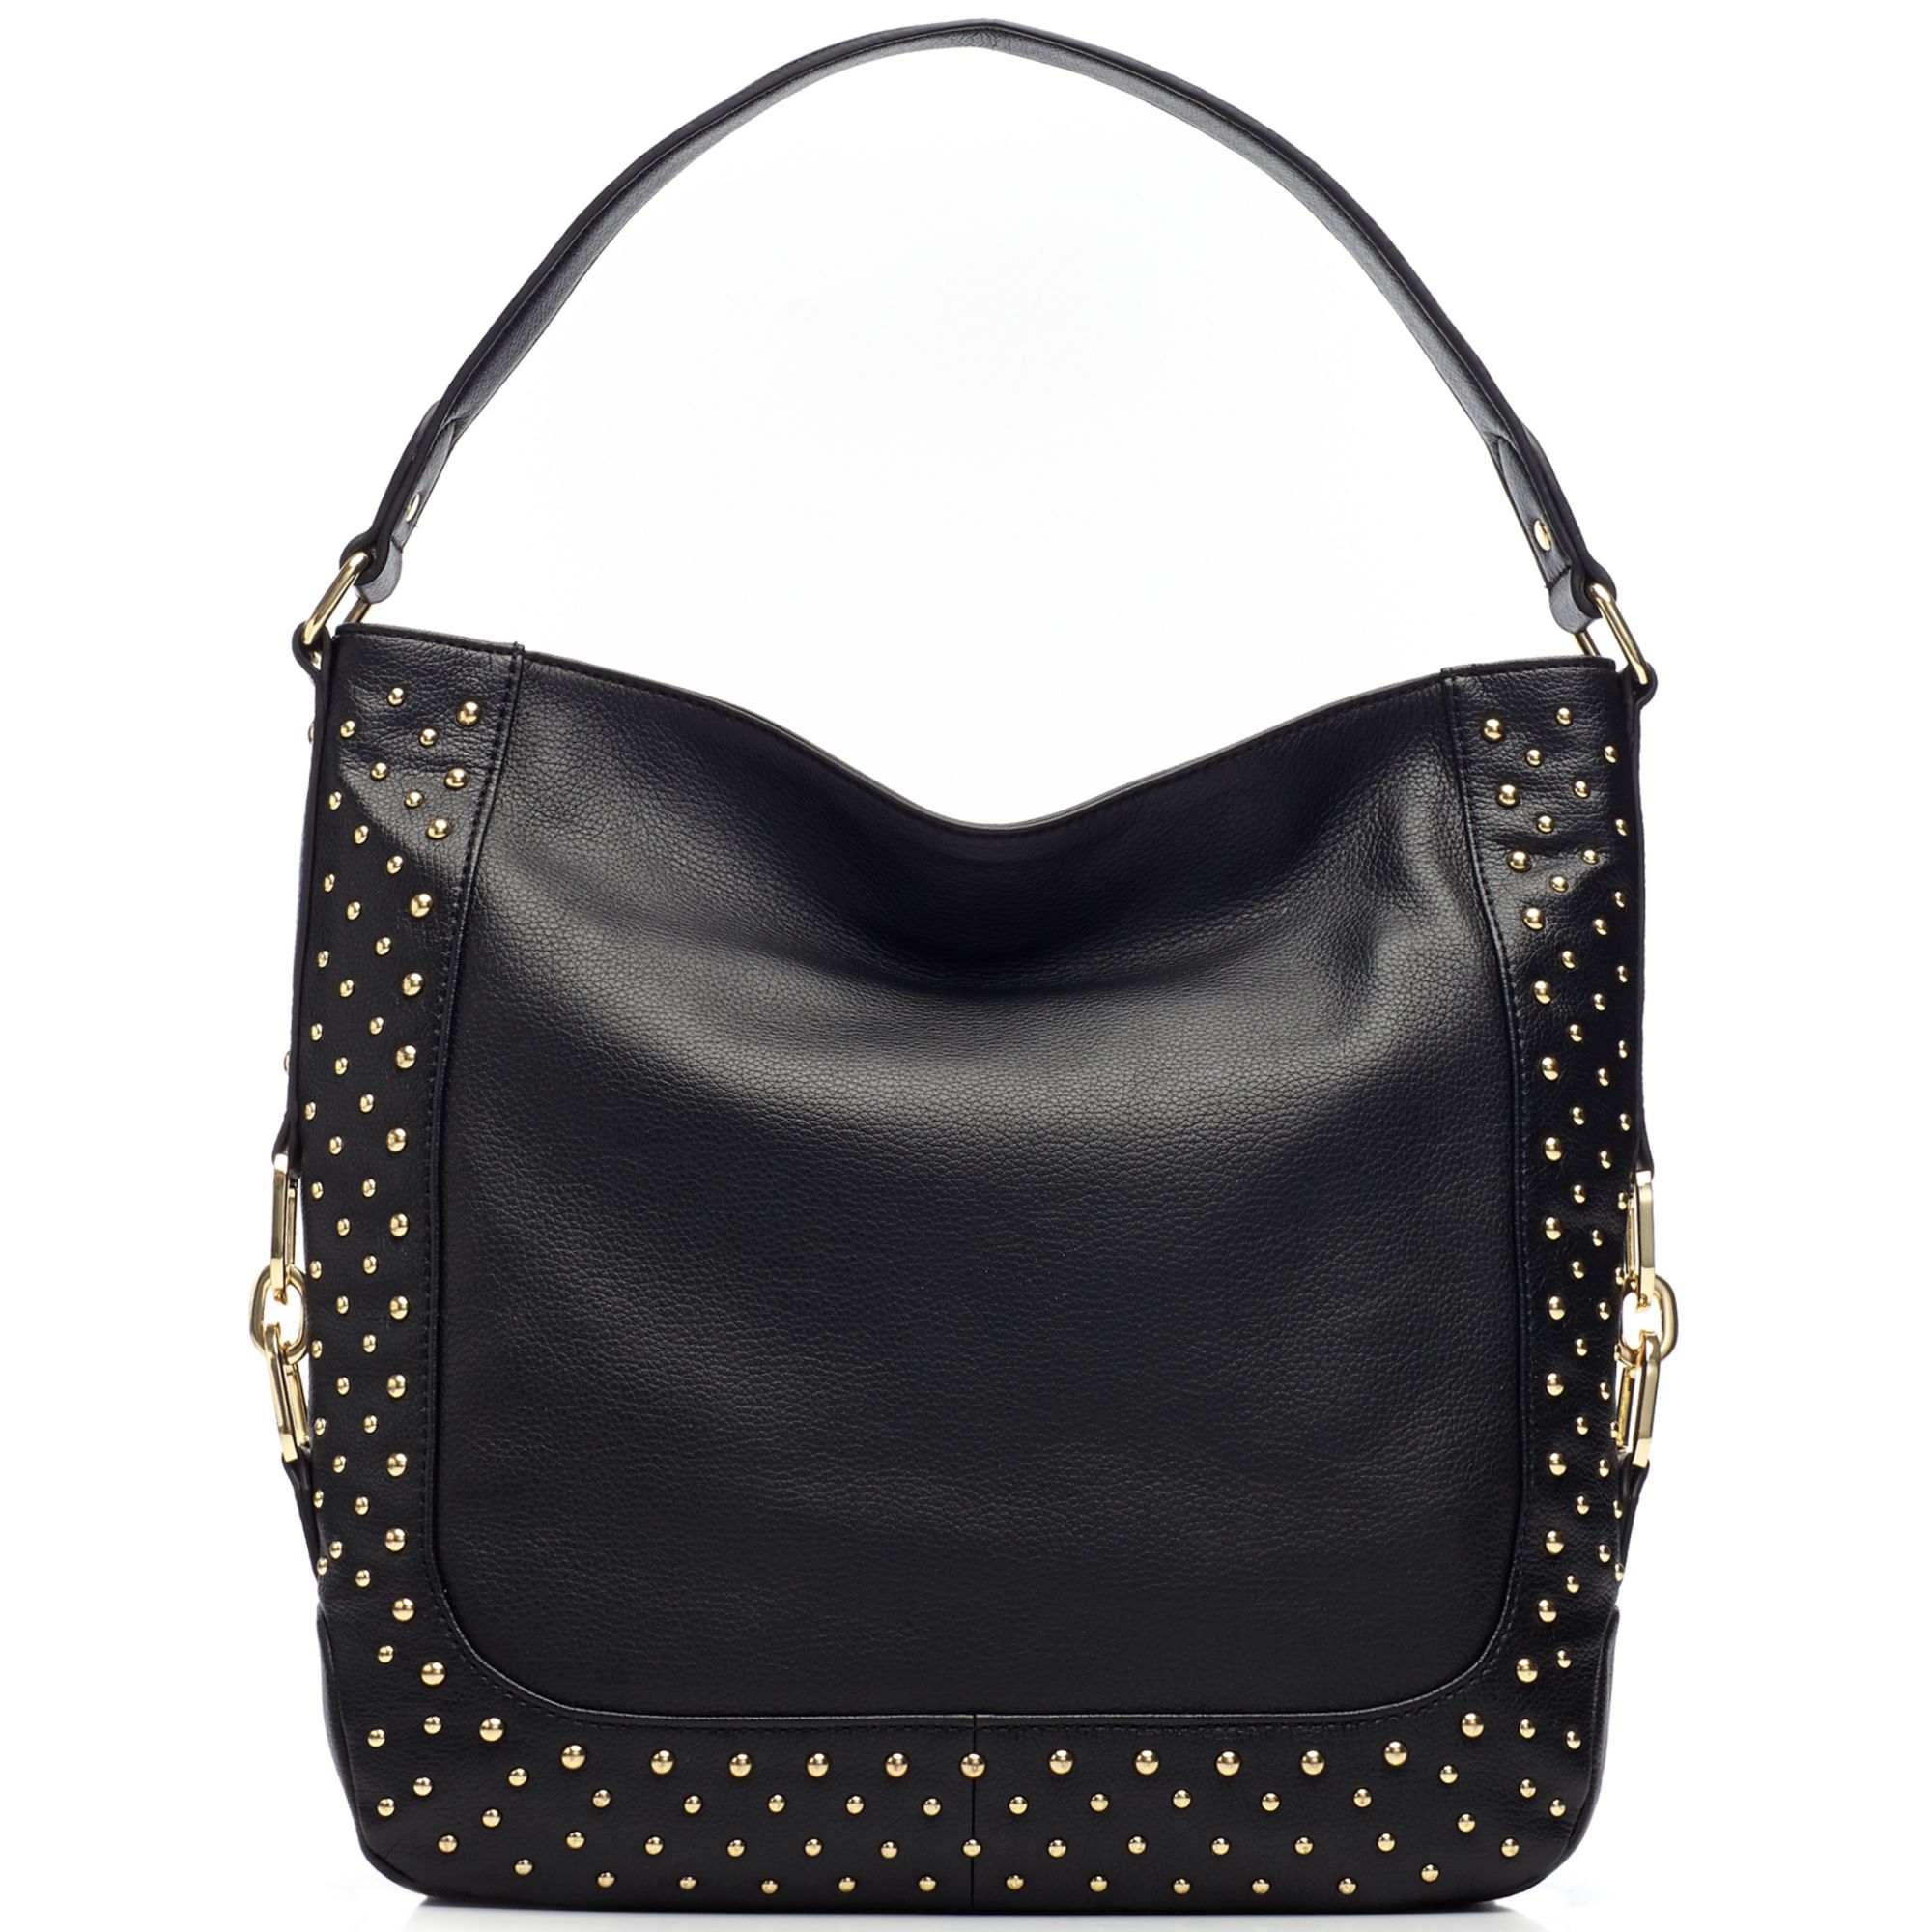 Lyst - Inc international concepts Inc Handbag Angelina Leather Hobo in ...